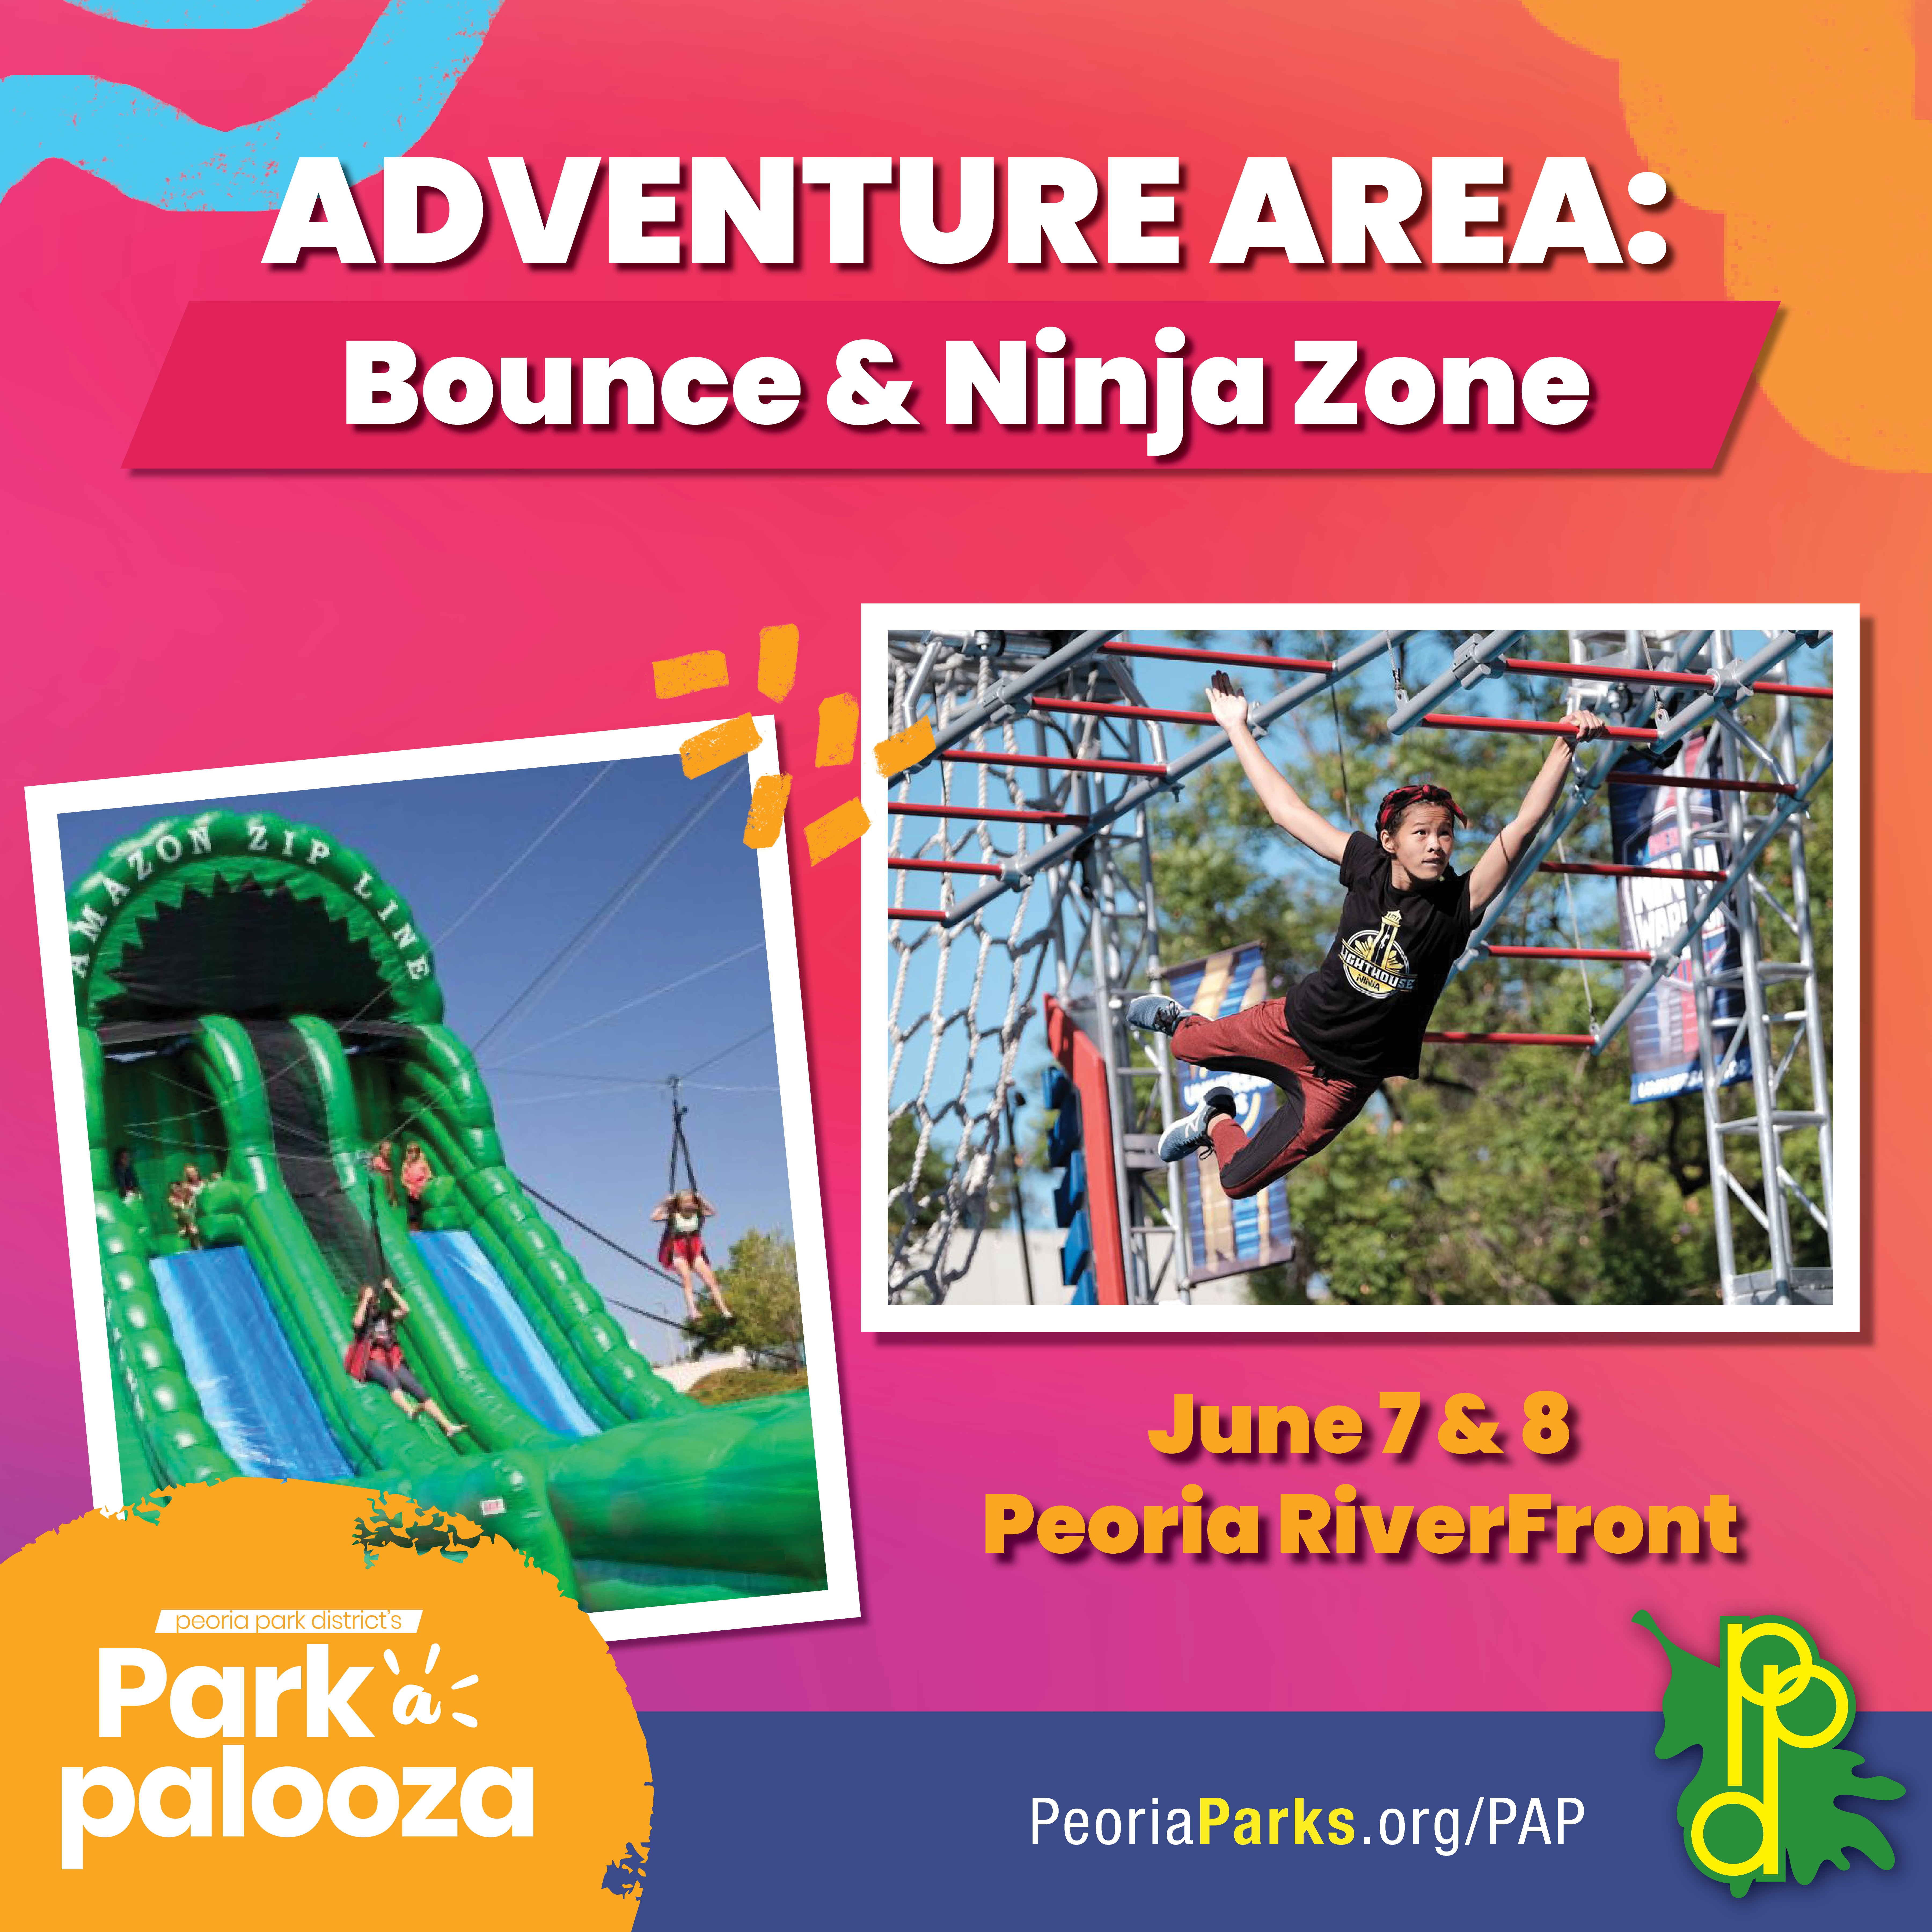 Park-A-Palooza- Adventure Area: Bounce & Ninja Zone